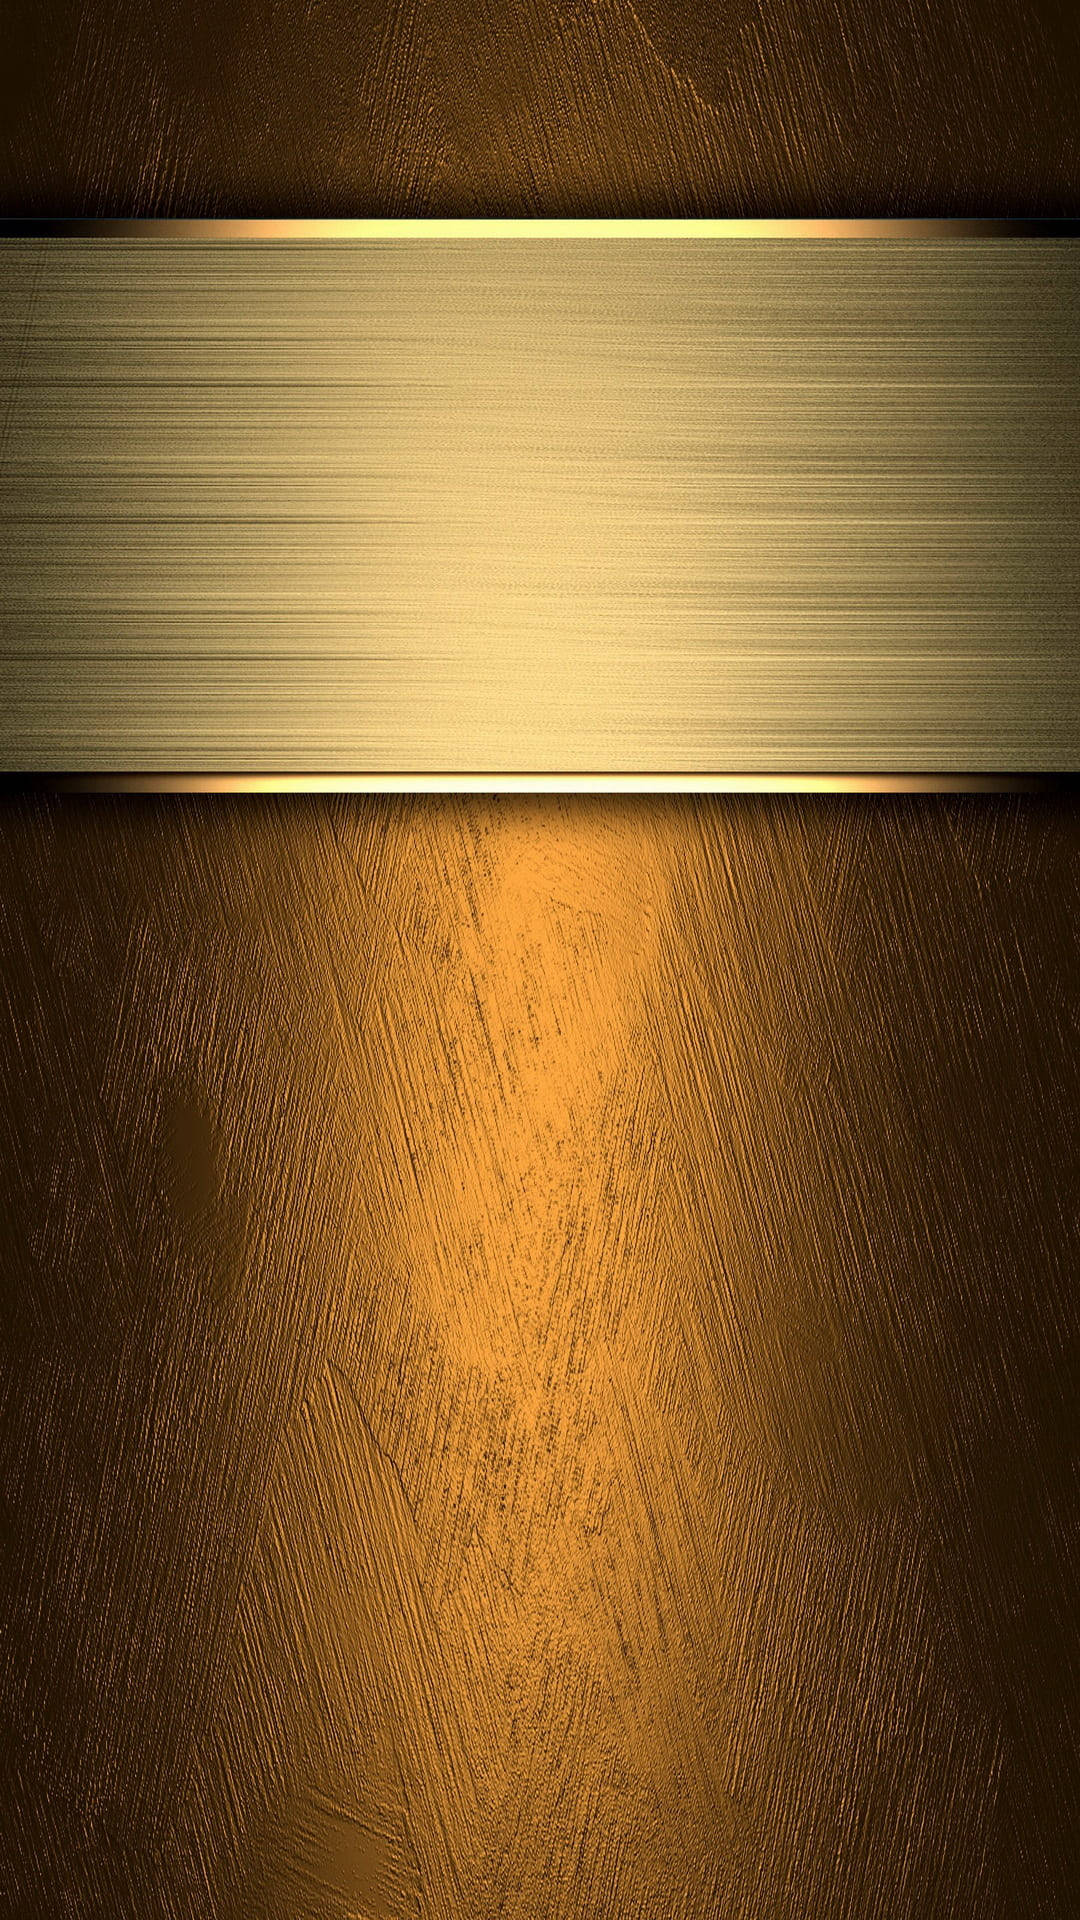 Iphone 12 Pro Max Gold Textures Wallpaper